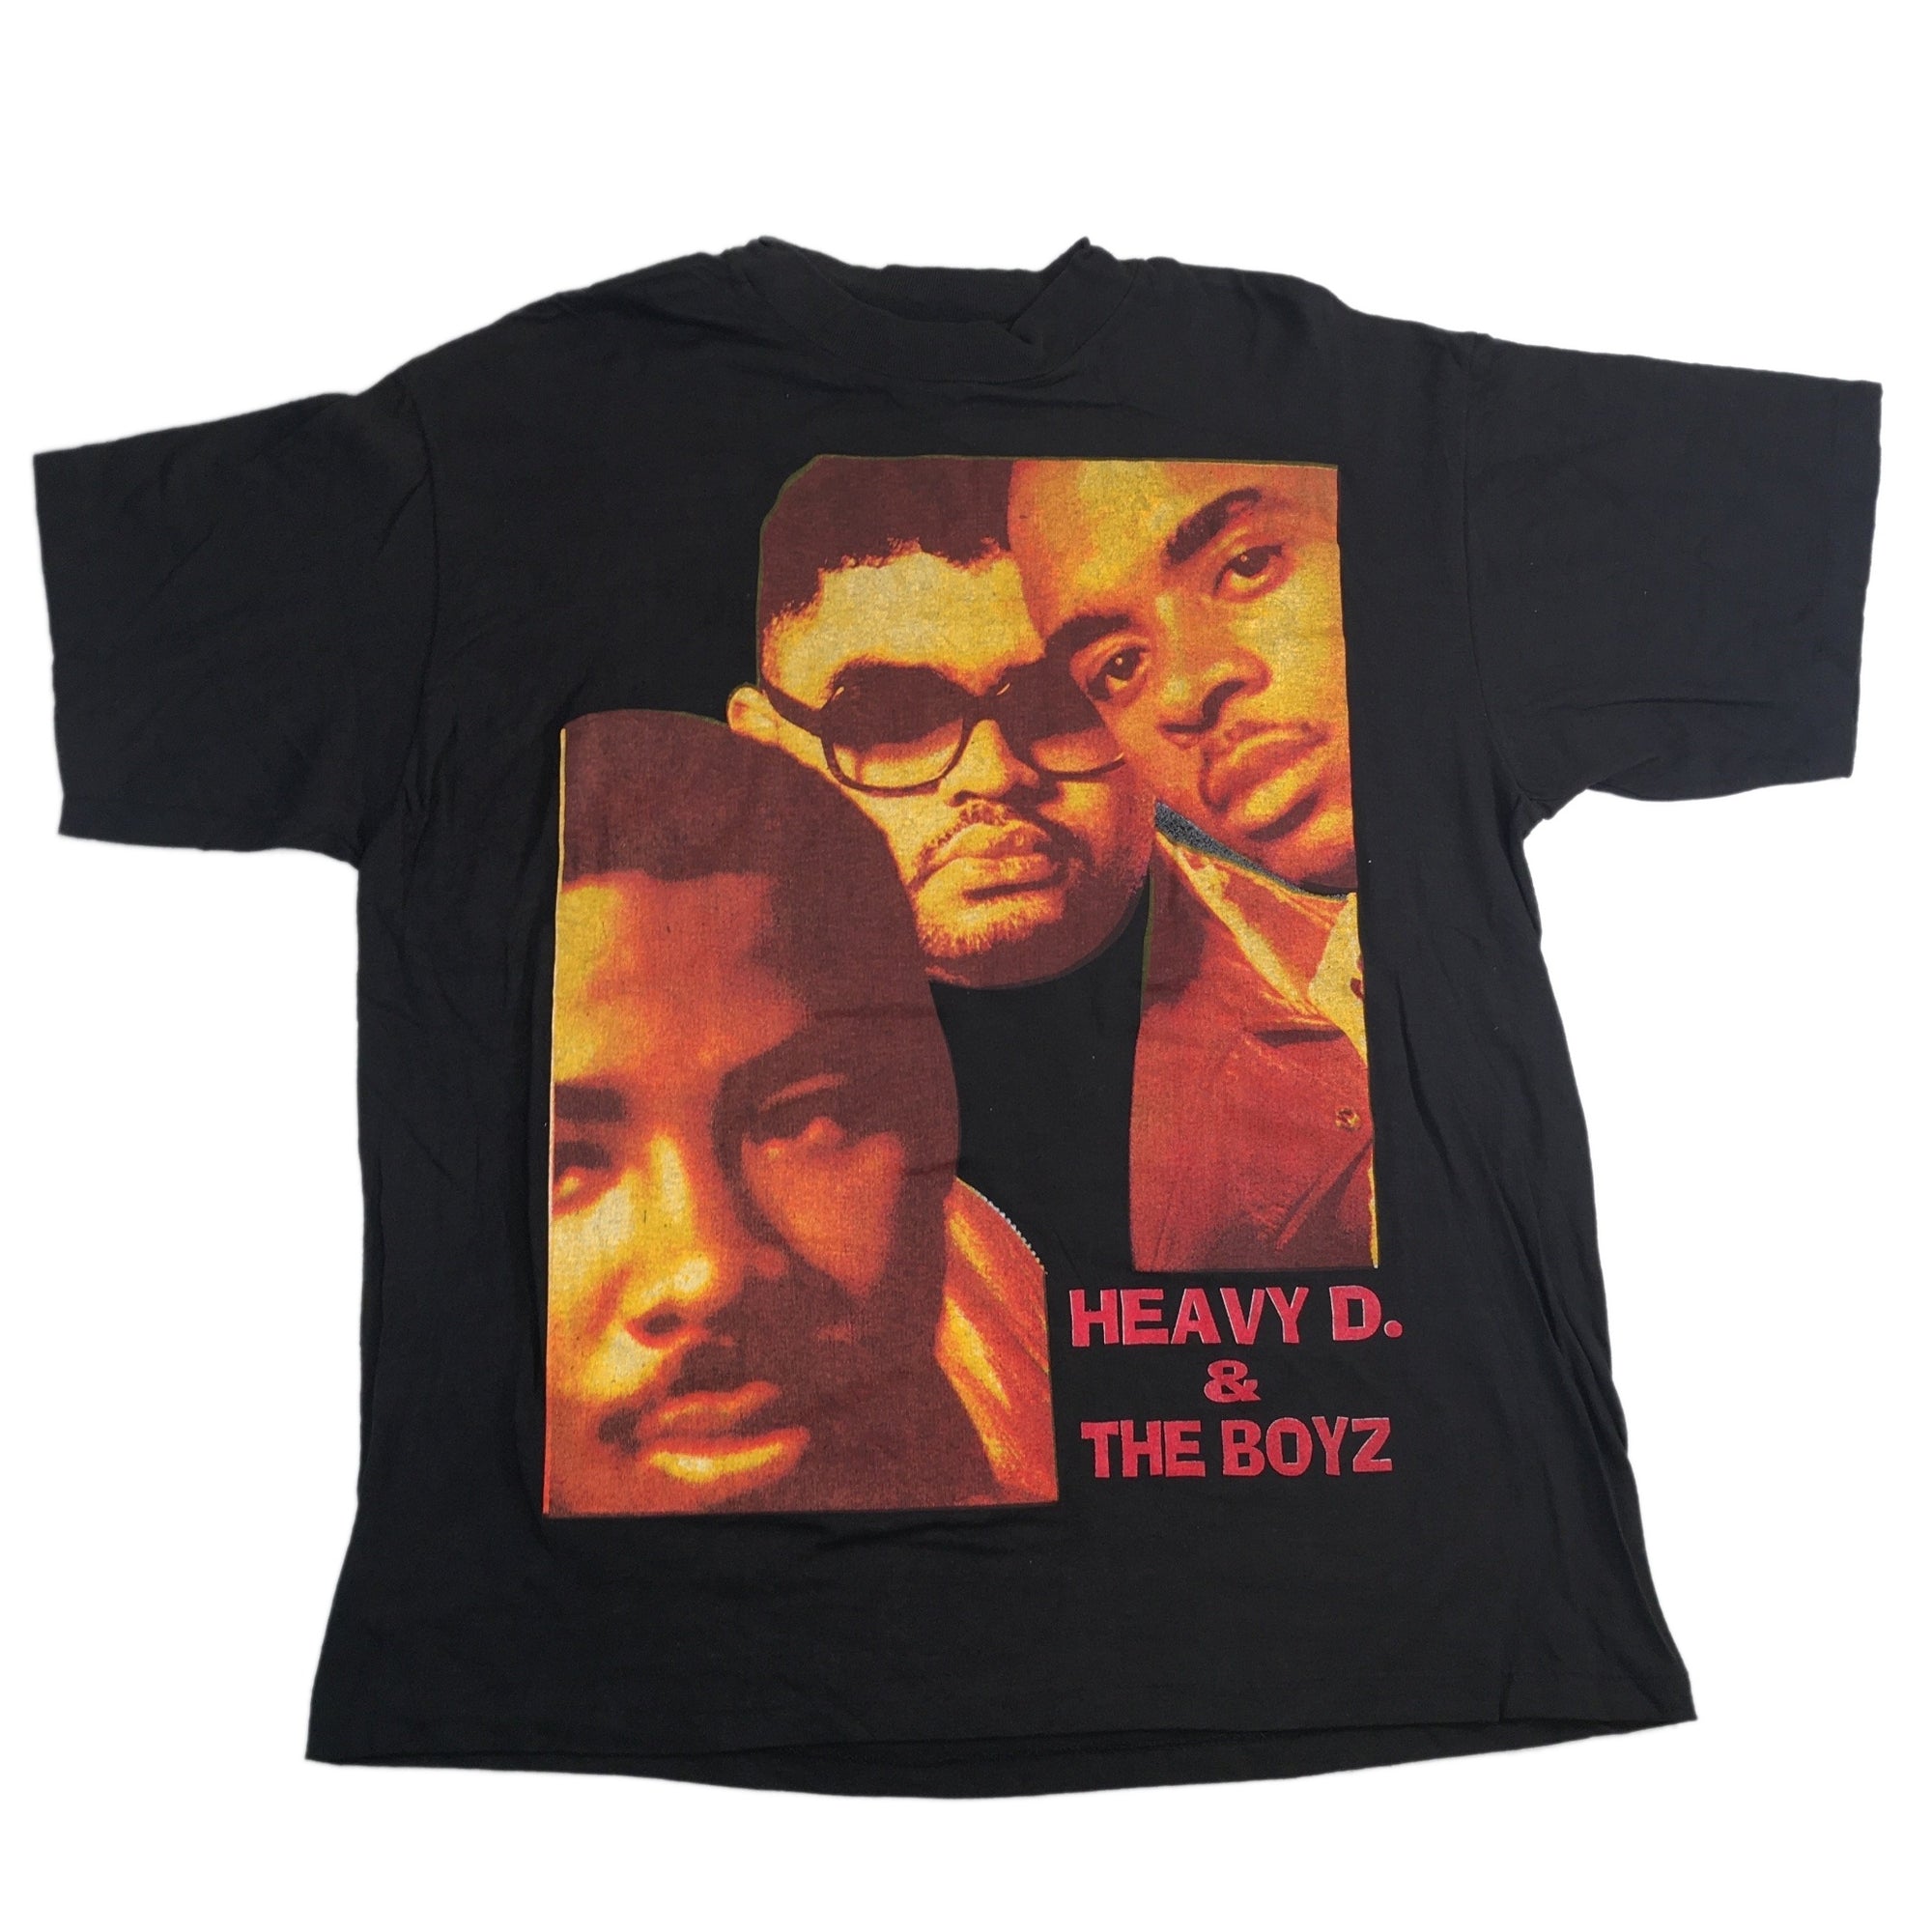 Vintage Heavy D. & The Boyz "Nuttin' But Love" T-Shirt - jointcustodydc